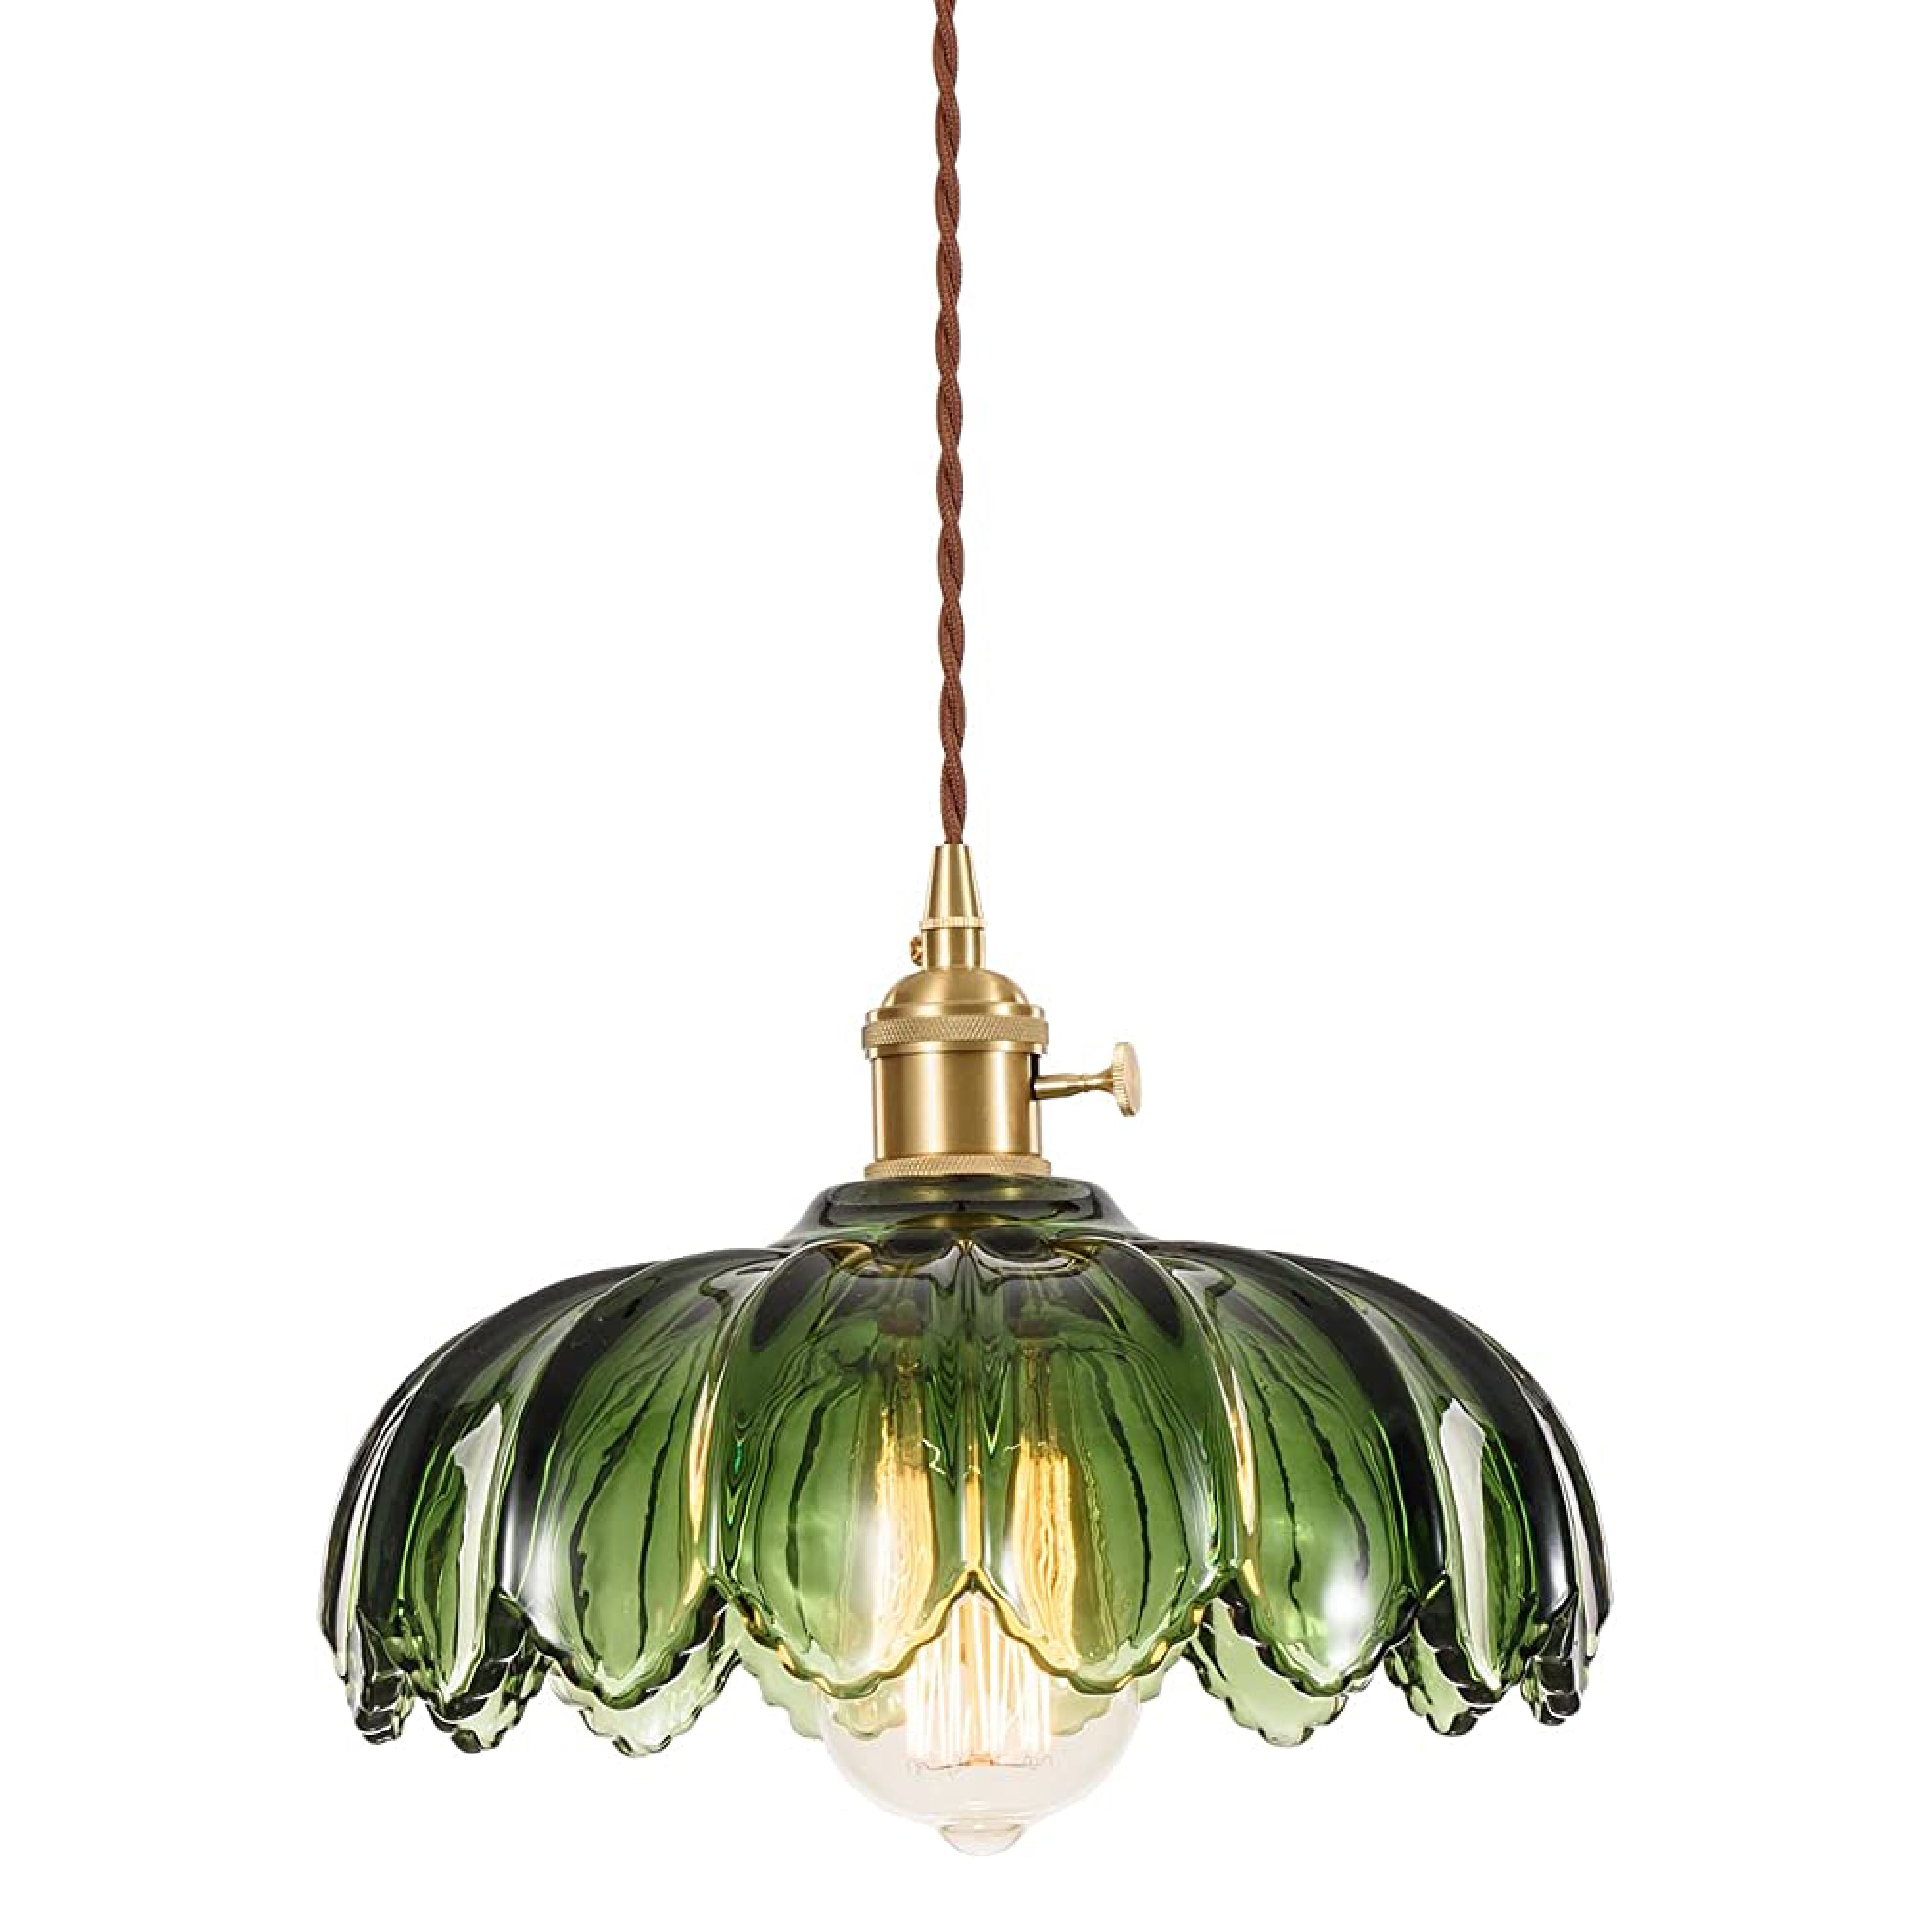 Glass vintage light fixtures Gold and green pendant light Retro chandelier shades light